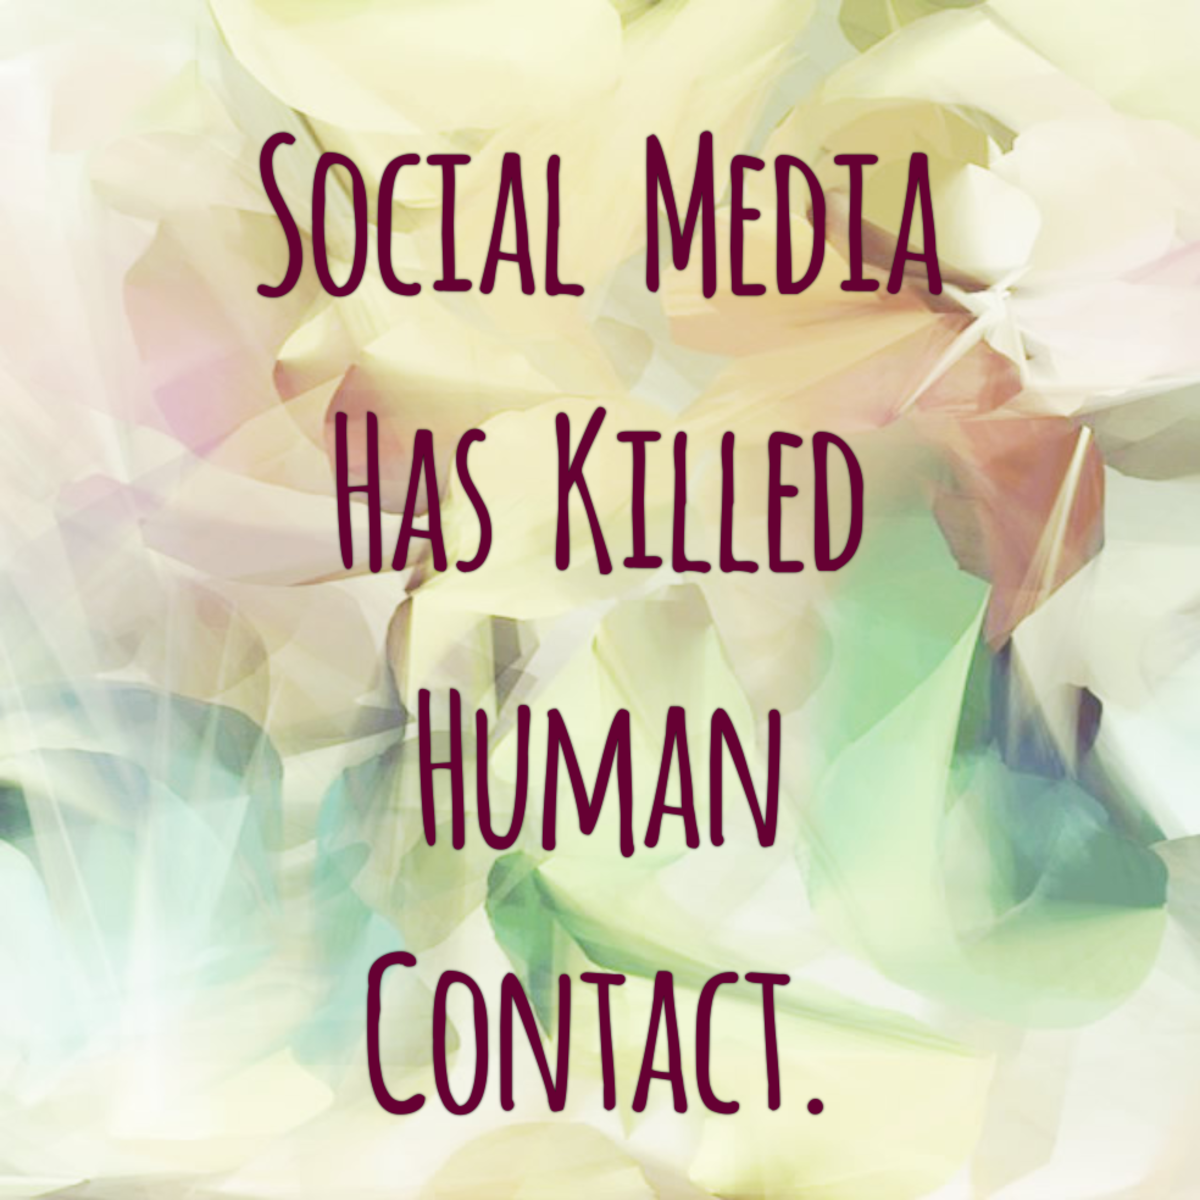 Social Media Has Killed Human Contact.